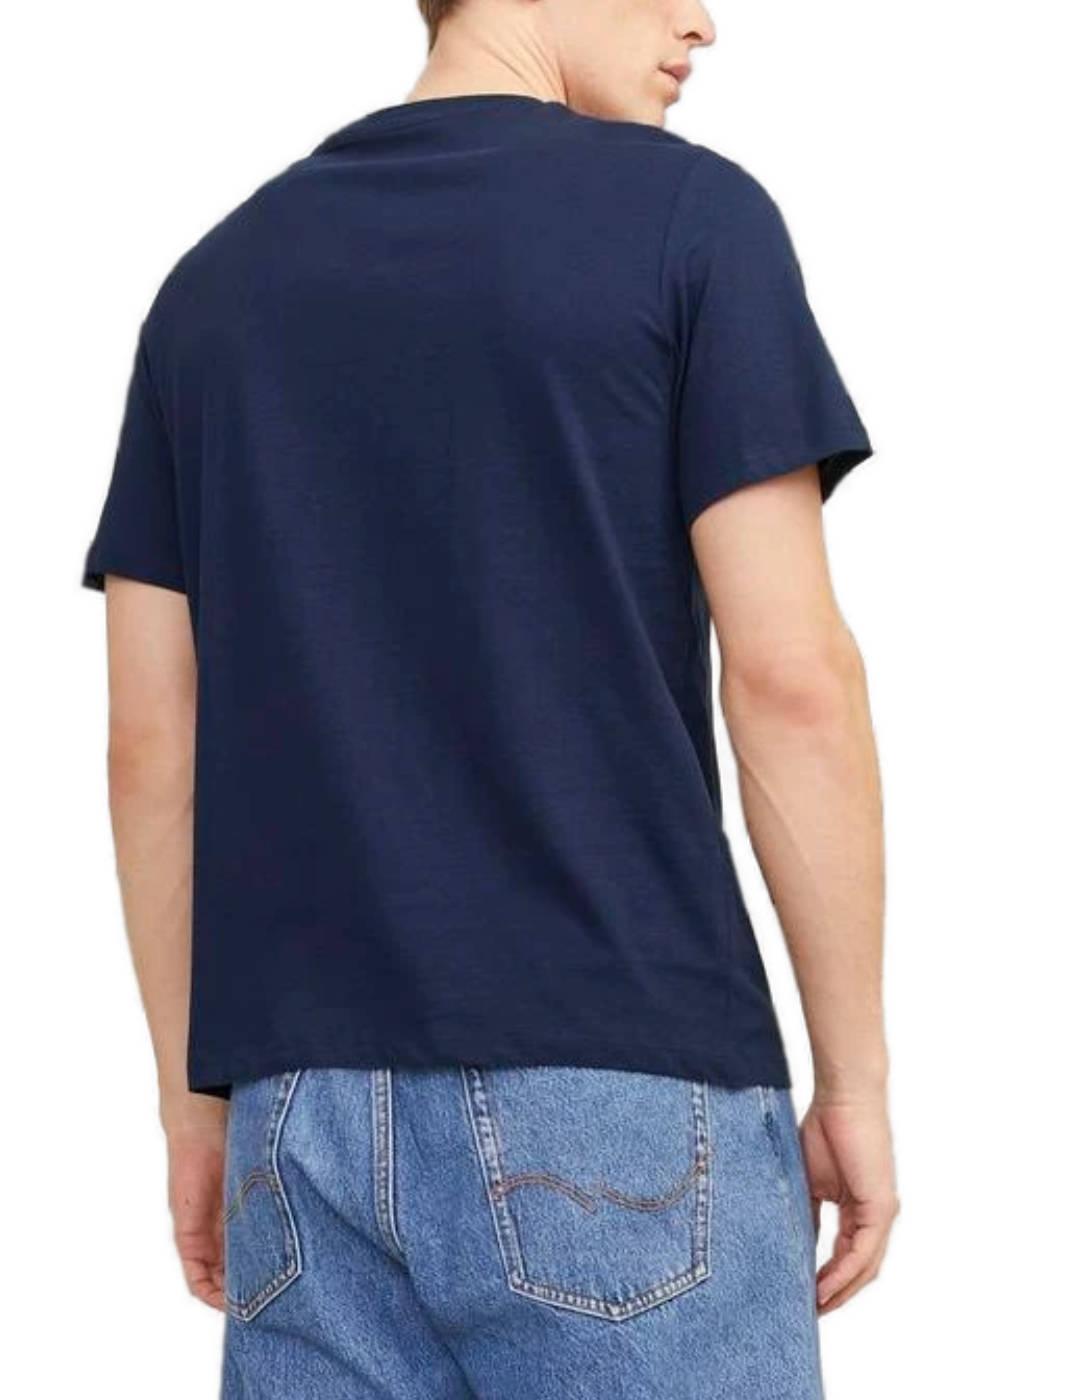 Camiseta Jack&Jones Summer marino manga corta para hombre